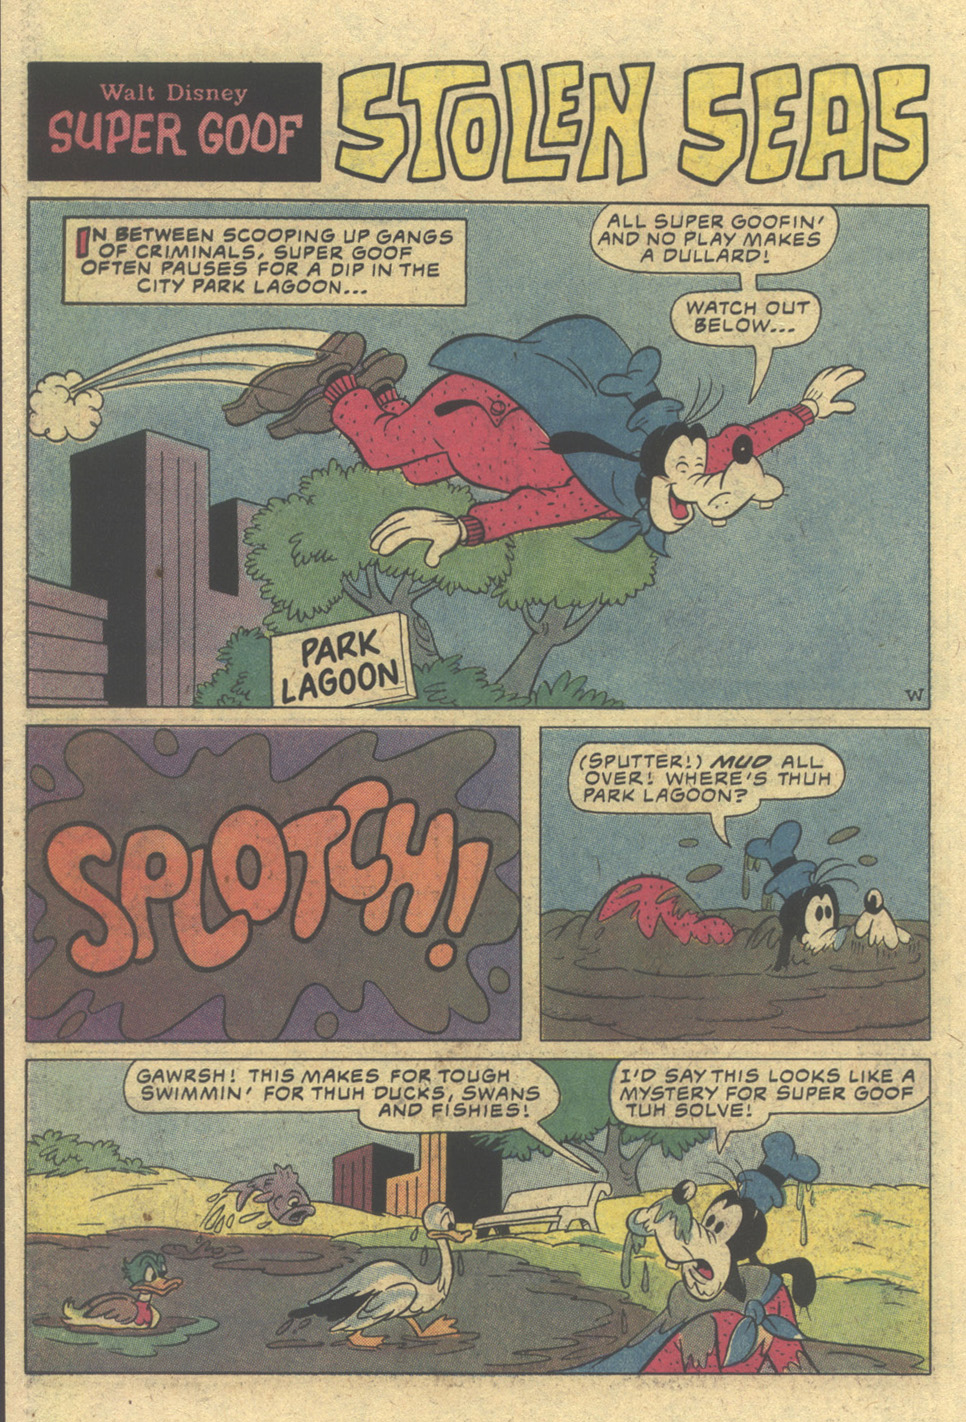 Read online Super Goof comic -  Issue #64 - 26